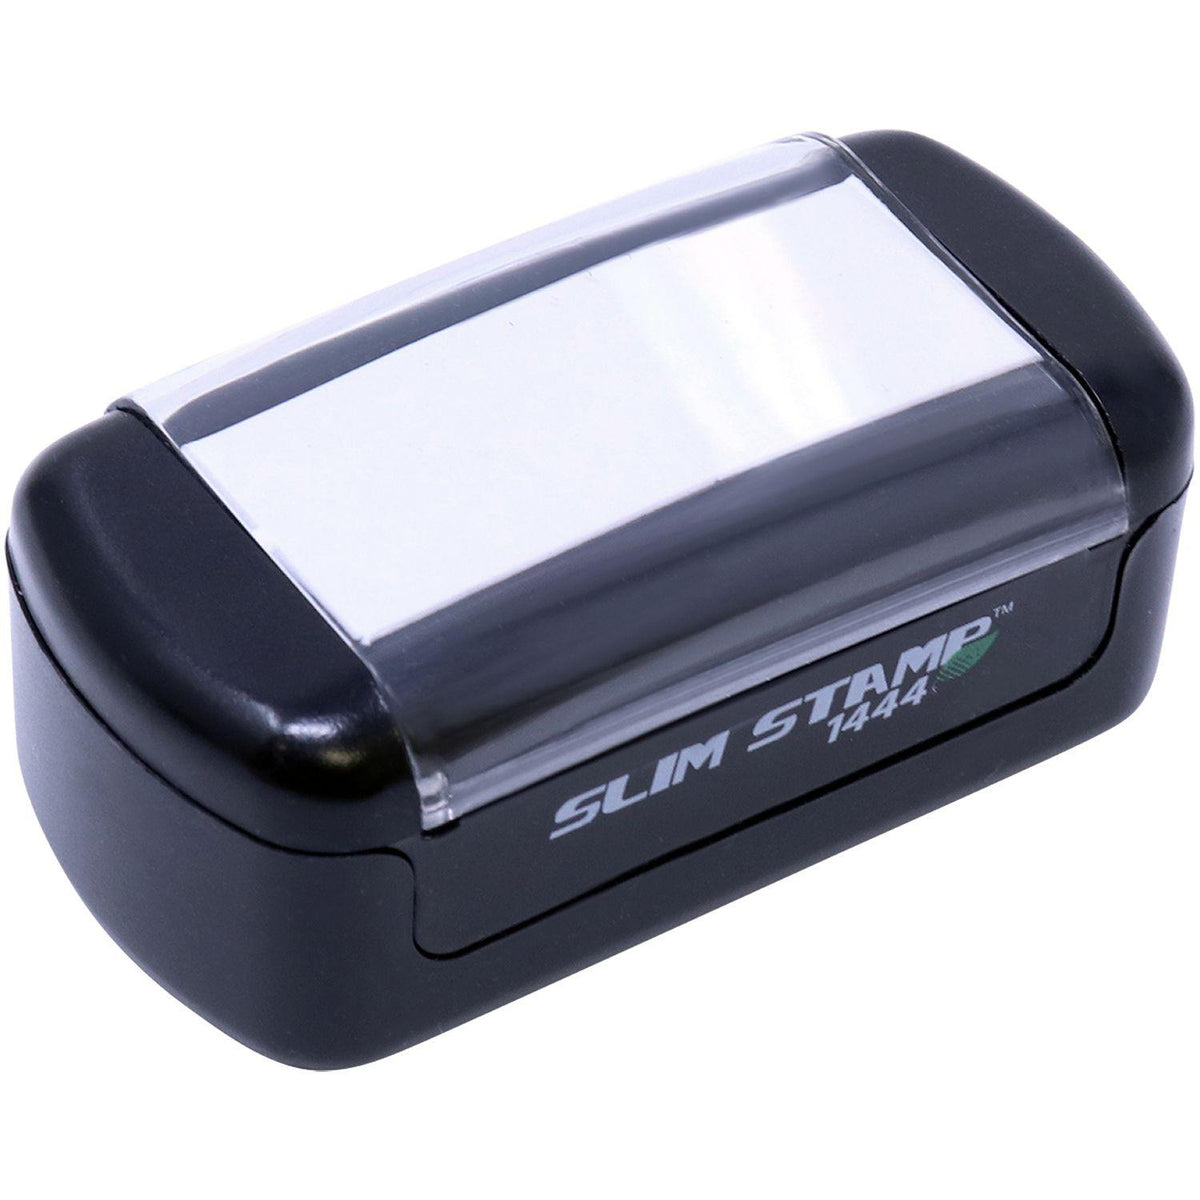 Slim Pre Inked Capitation Stamp - Engineer Seal Stamps - Brand_Slim, Impression Size_Small, Stamp Type_Pre-Inked Stamp, Type of Use_Finance, Type of Use_Medical Office